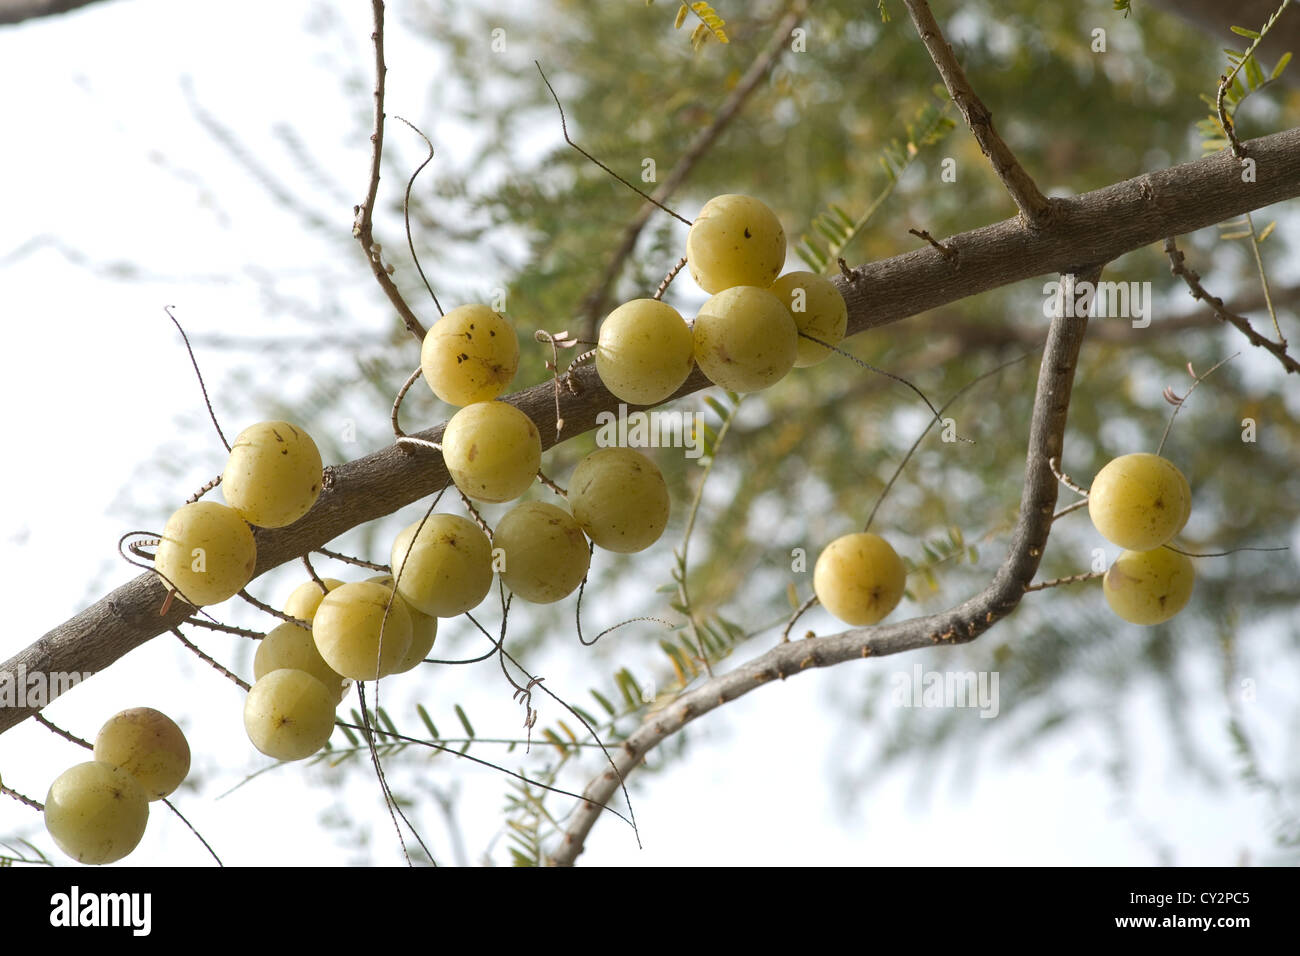 Indian gooseberry; Emblica officinalis or Phyllanthus emblica L,Tamil Nadu,India. Stock Photo